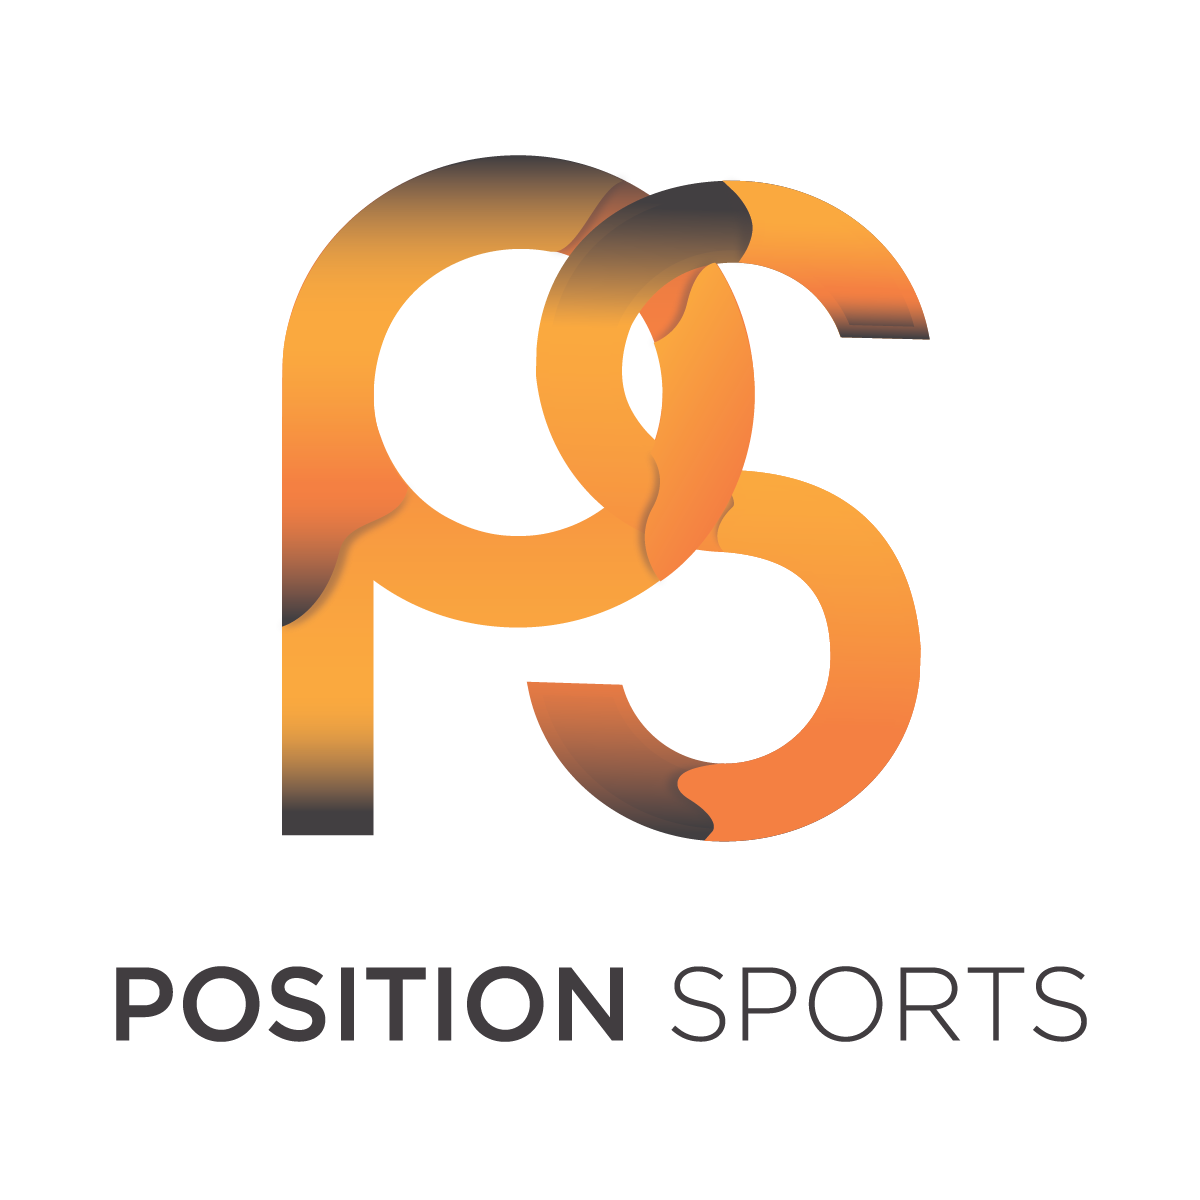 Position Sports, Inc